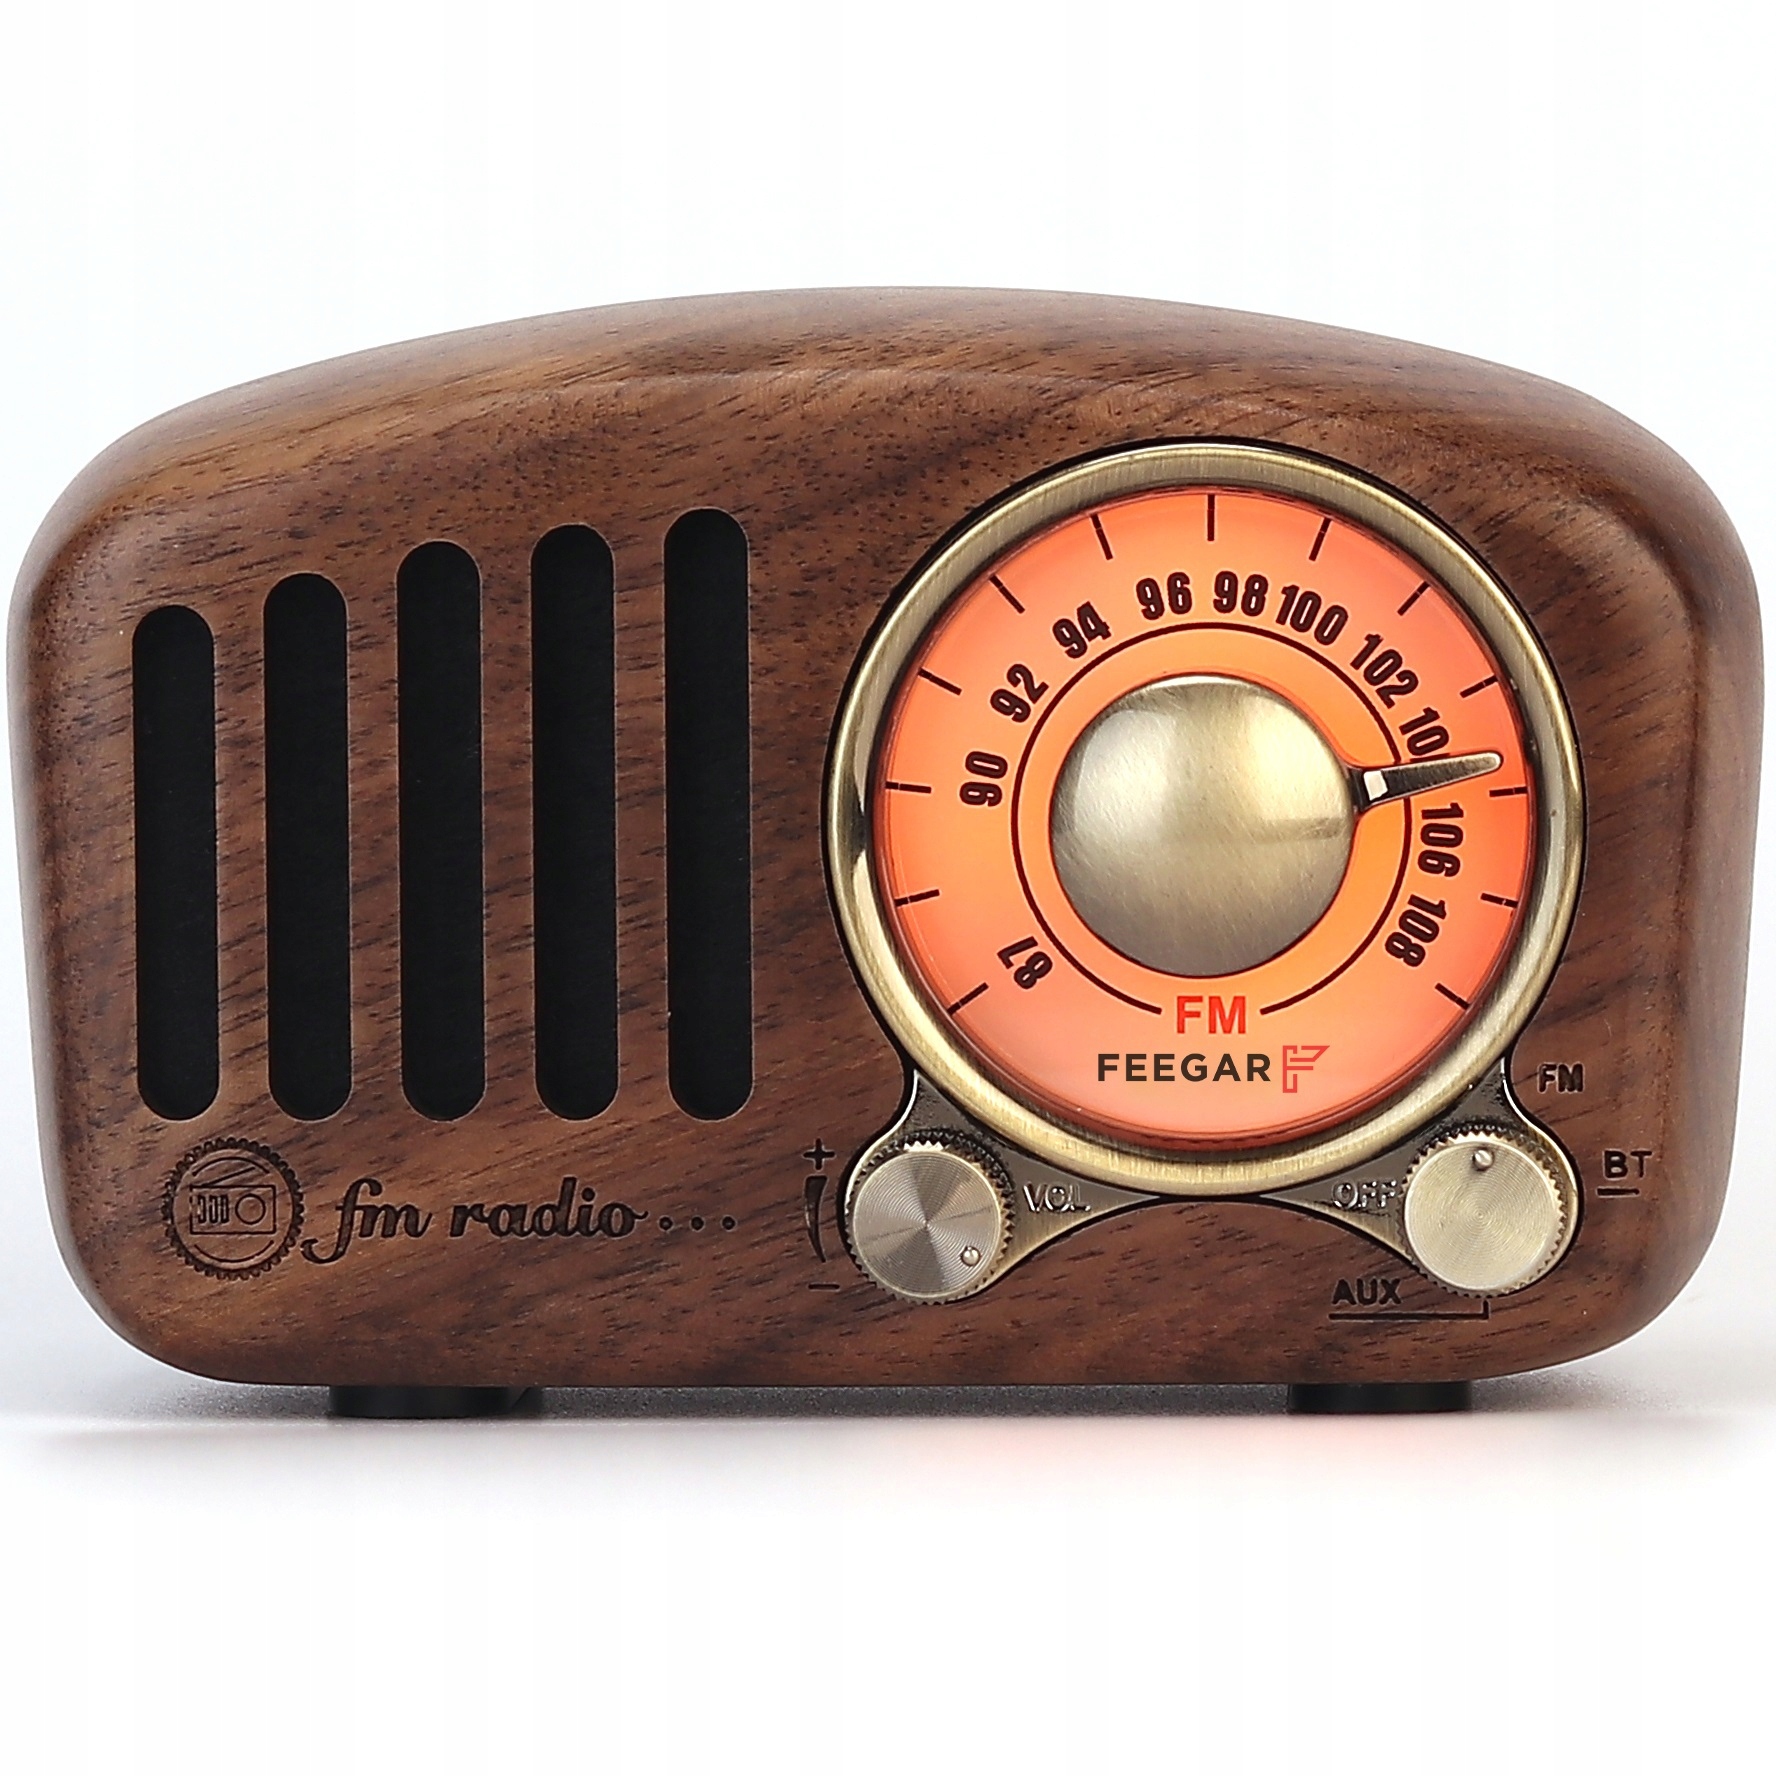 Feegar RETRO FM-радио Кухонное Деревянное BT SD 10h Код производителя Retro Wood